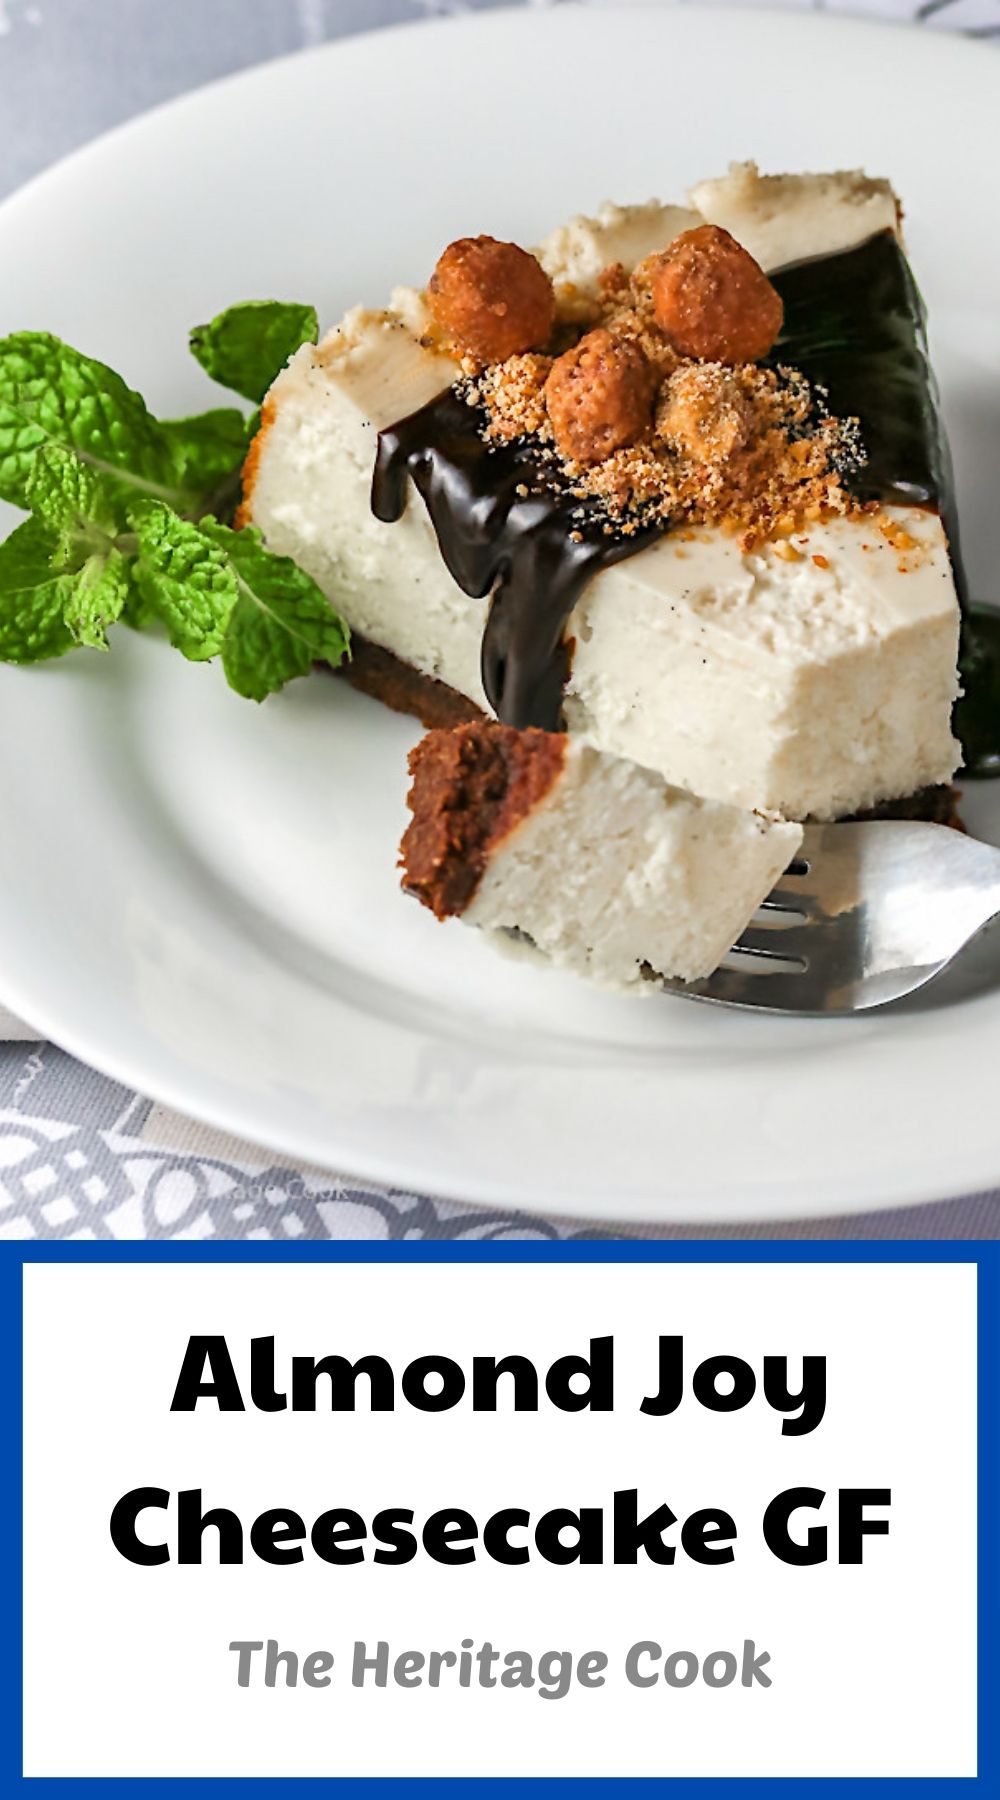 Almond Joy Coconut Chocolate Cheesecake GF 2021 Jane Bonacci, The Heritage Cook